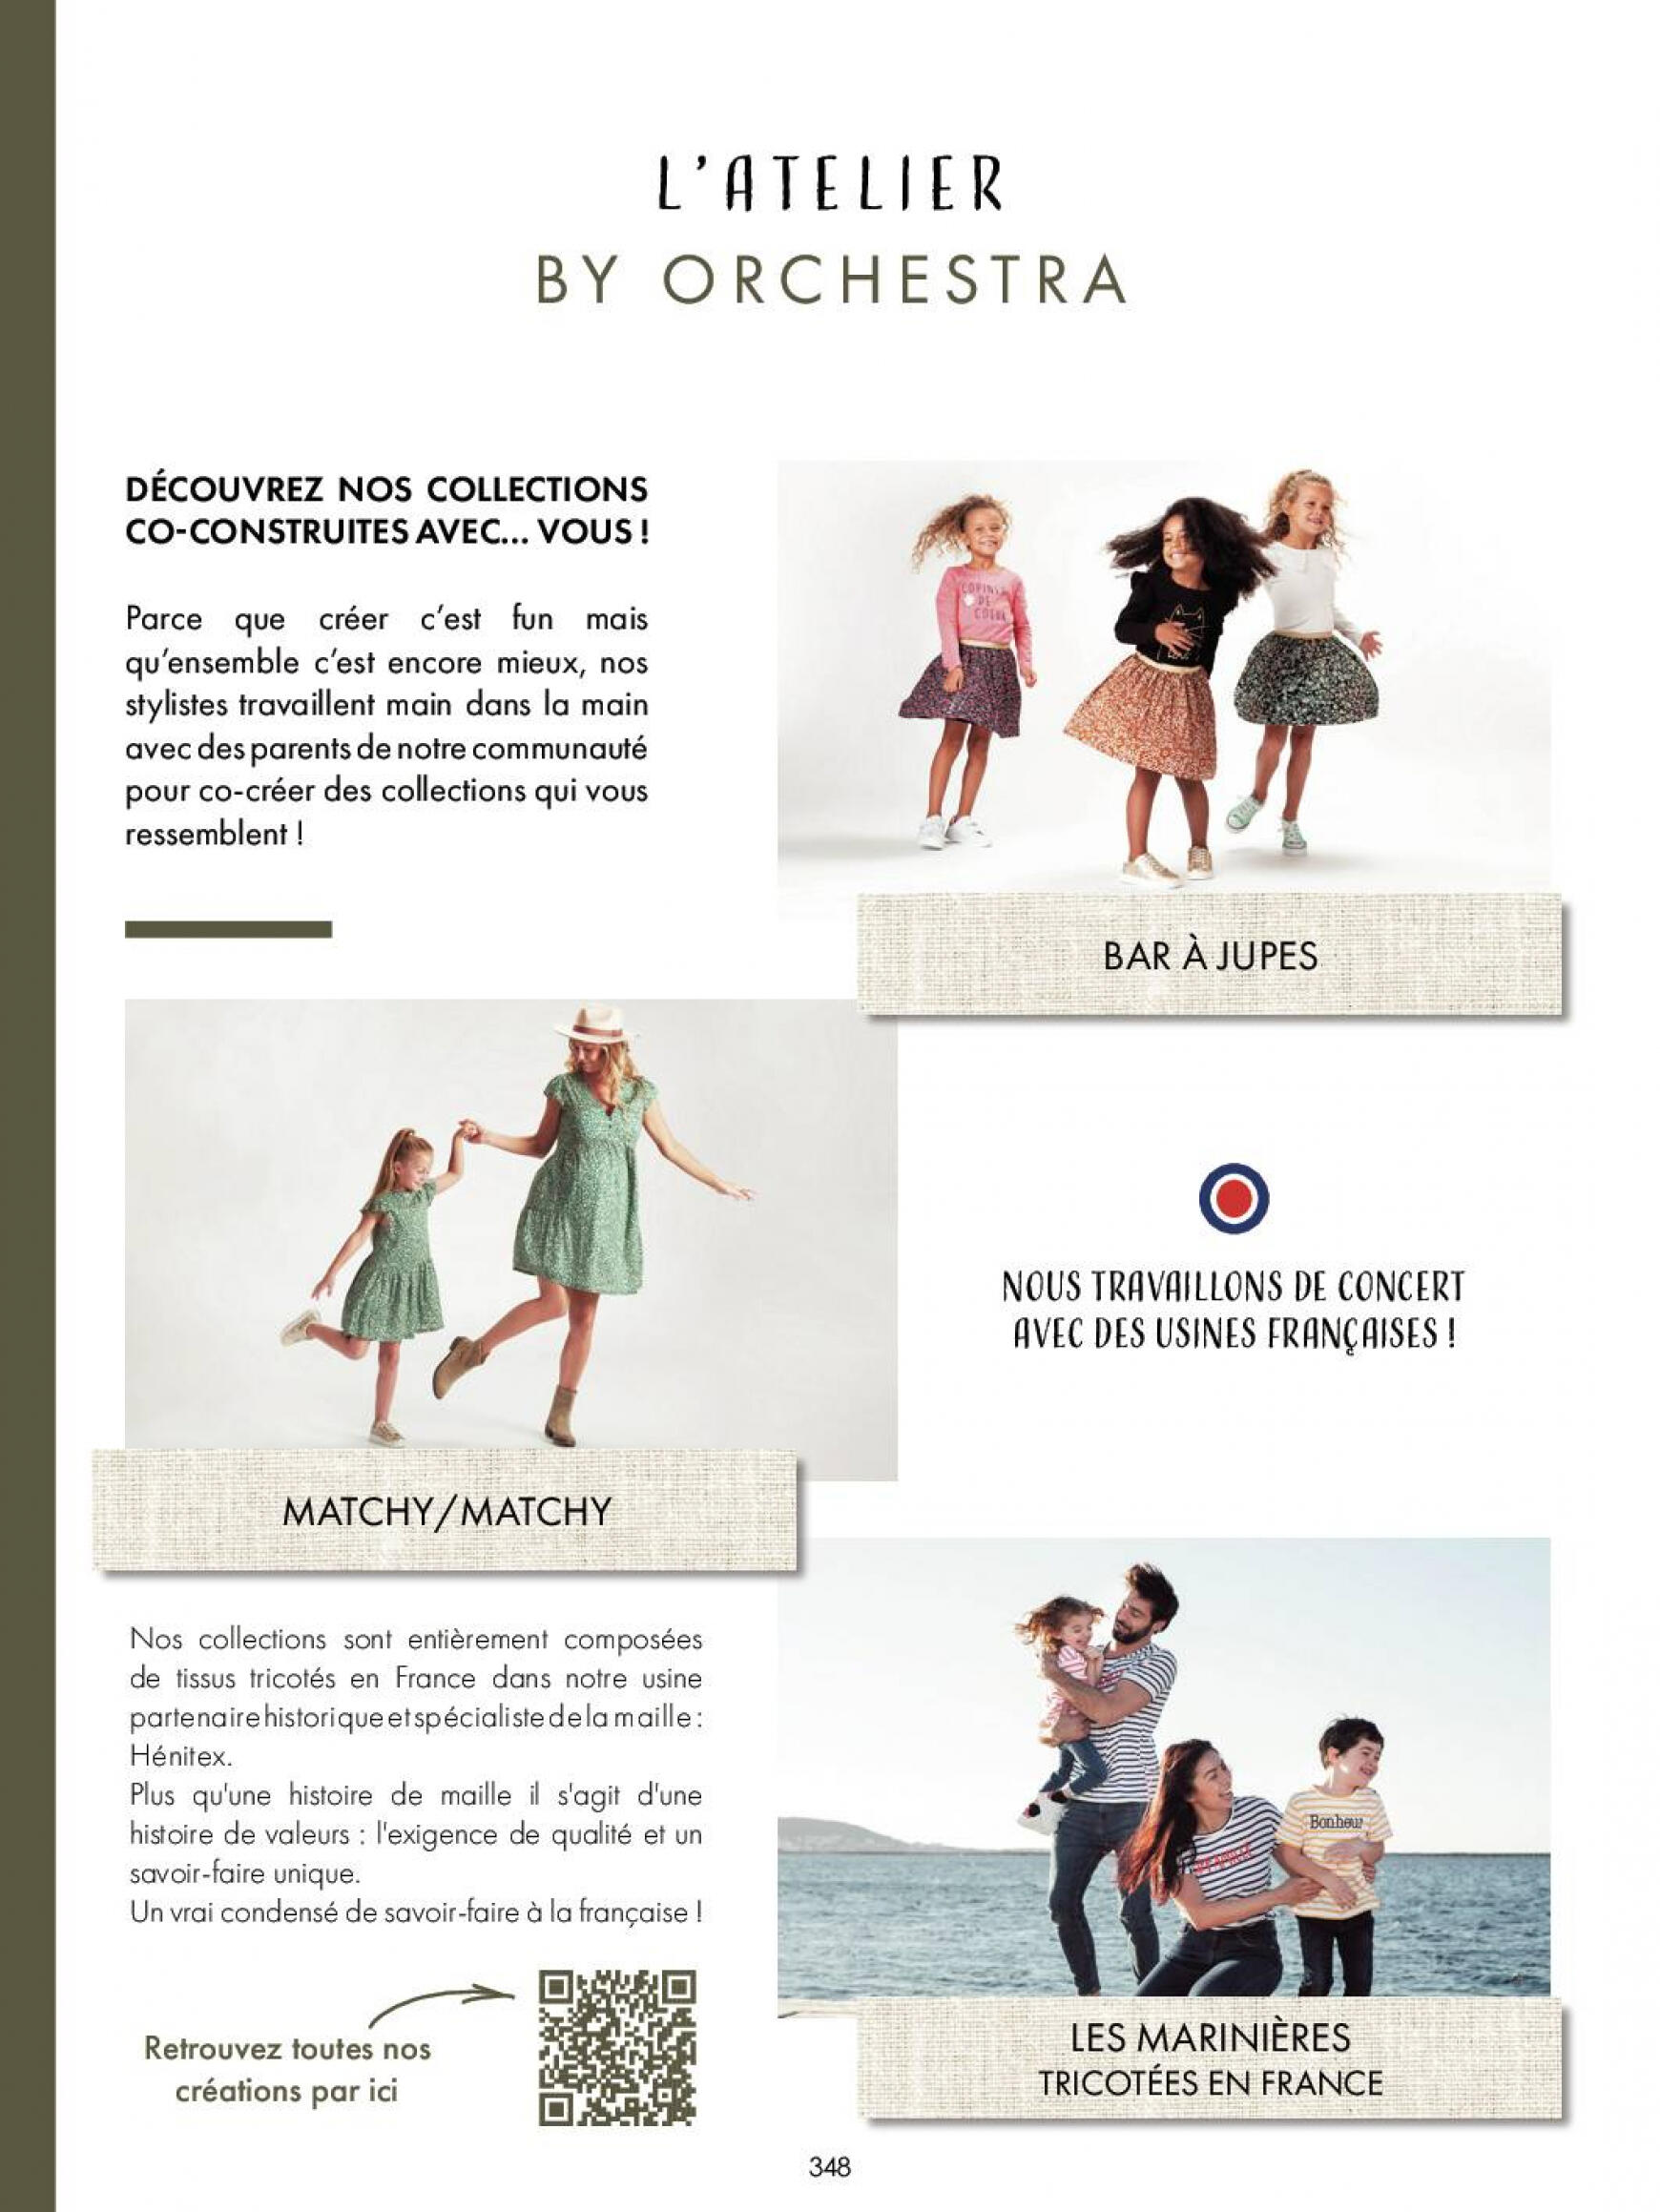 orchestra - Catalogue Orchestra de du samedi 01.04. - page: 348